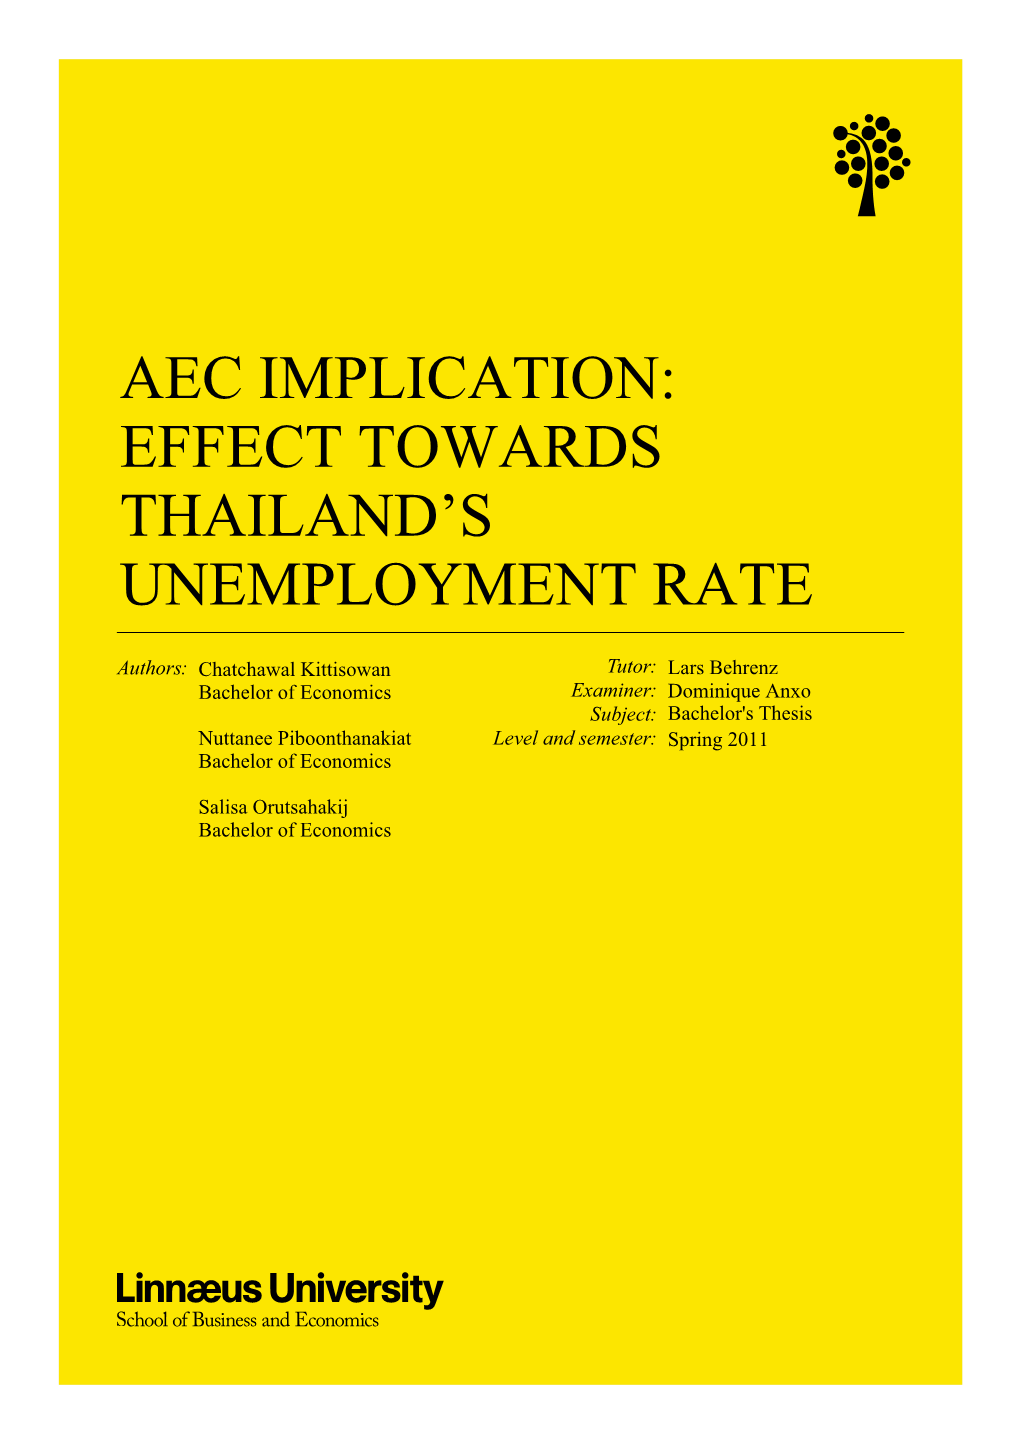 Effect Towards Thailand's Unemployment Rate